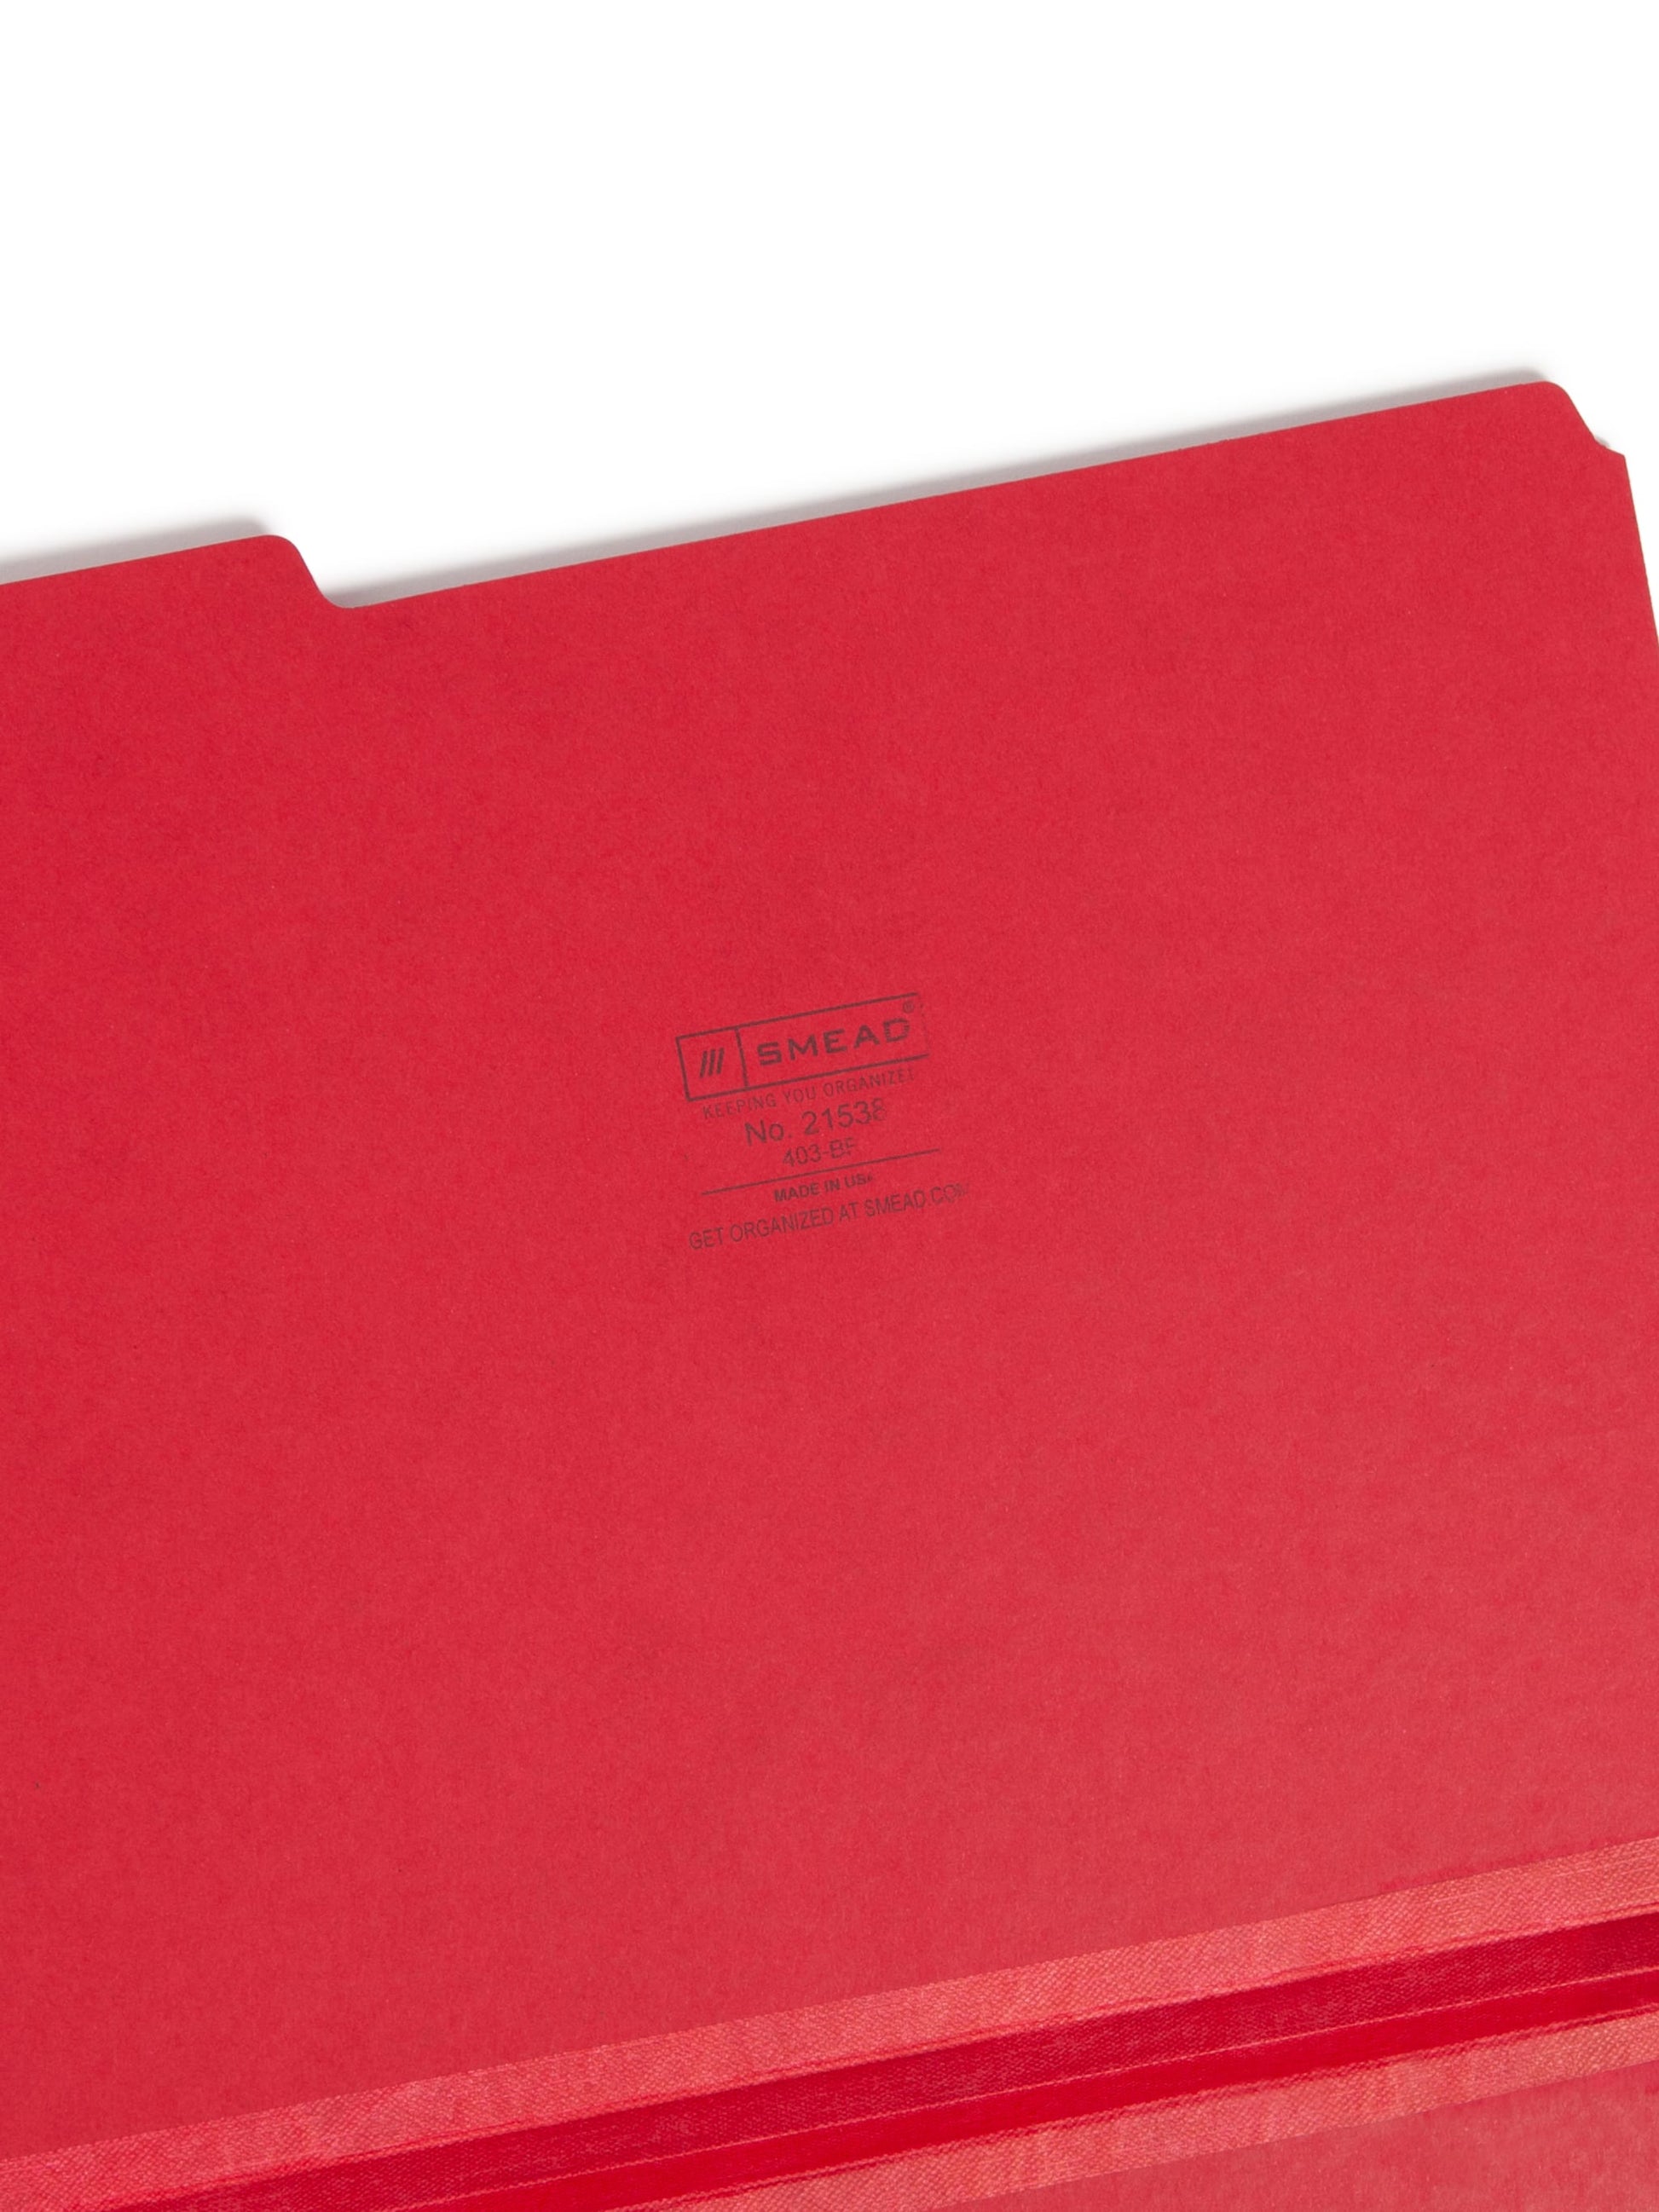 Pressboard File Folder, 1 inch Expansion, 1/3-Cut Tab, Bright Red Color, Letter Size, Set of 25, 086486215381